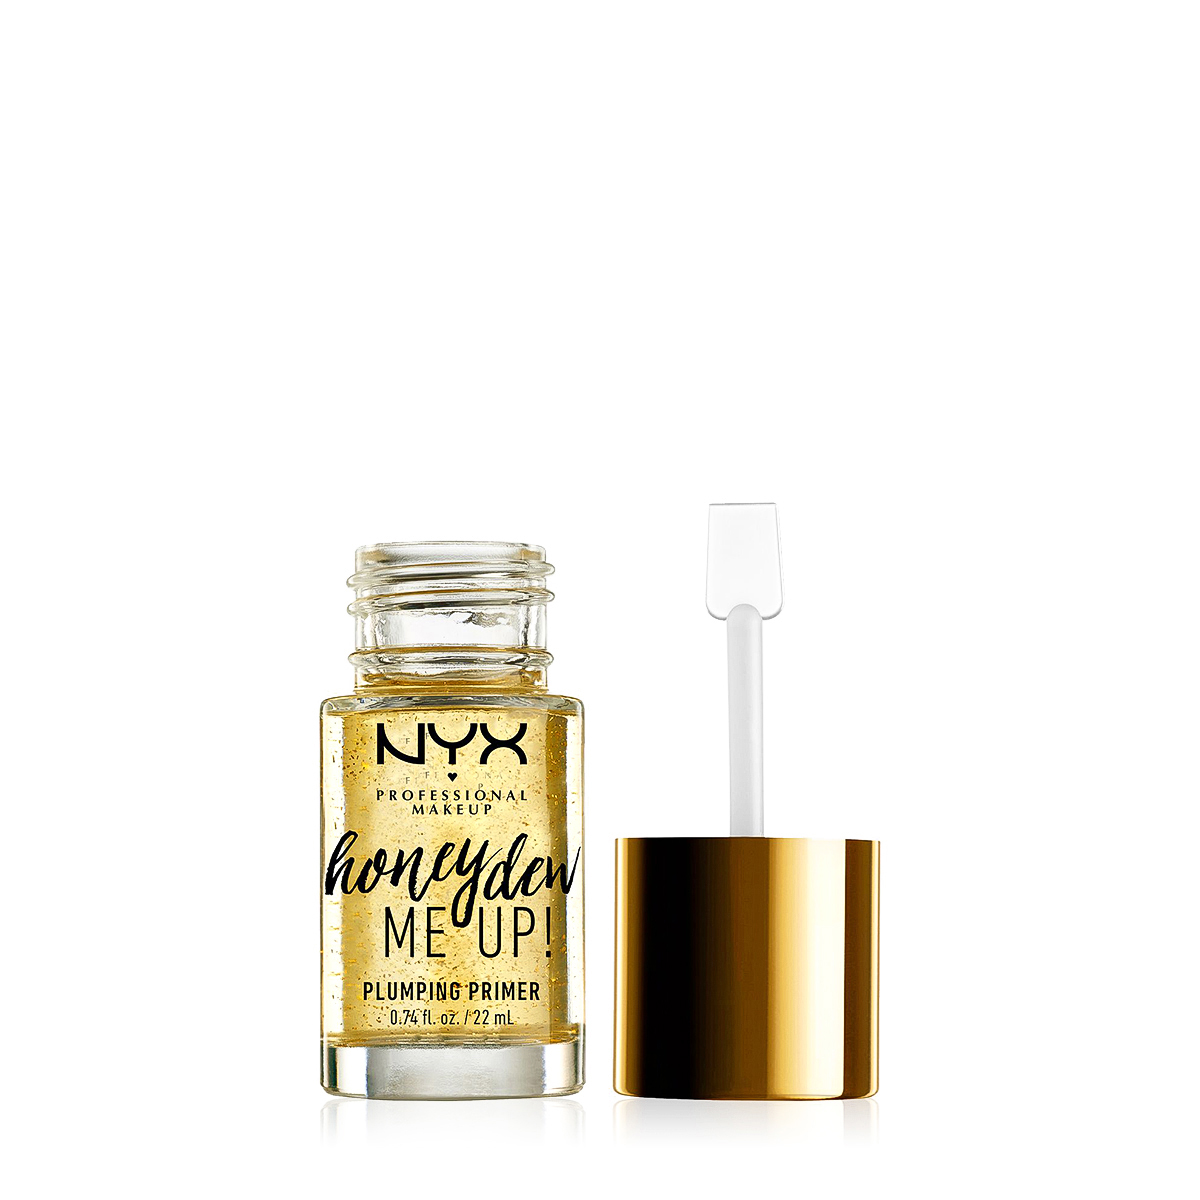 Nyx Professional Makeup - Honey Dew Me Up! Dewy Face Primer - 0.74